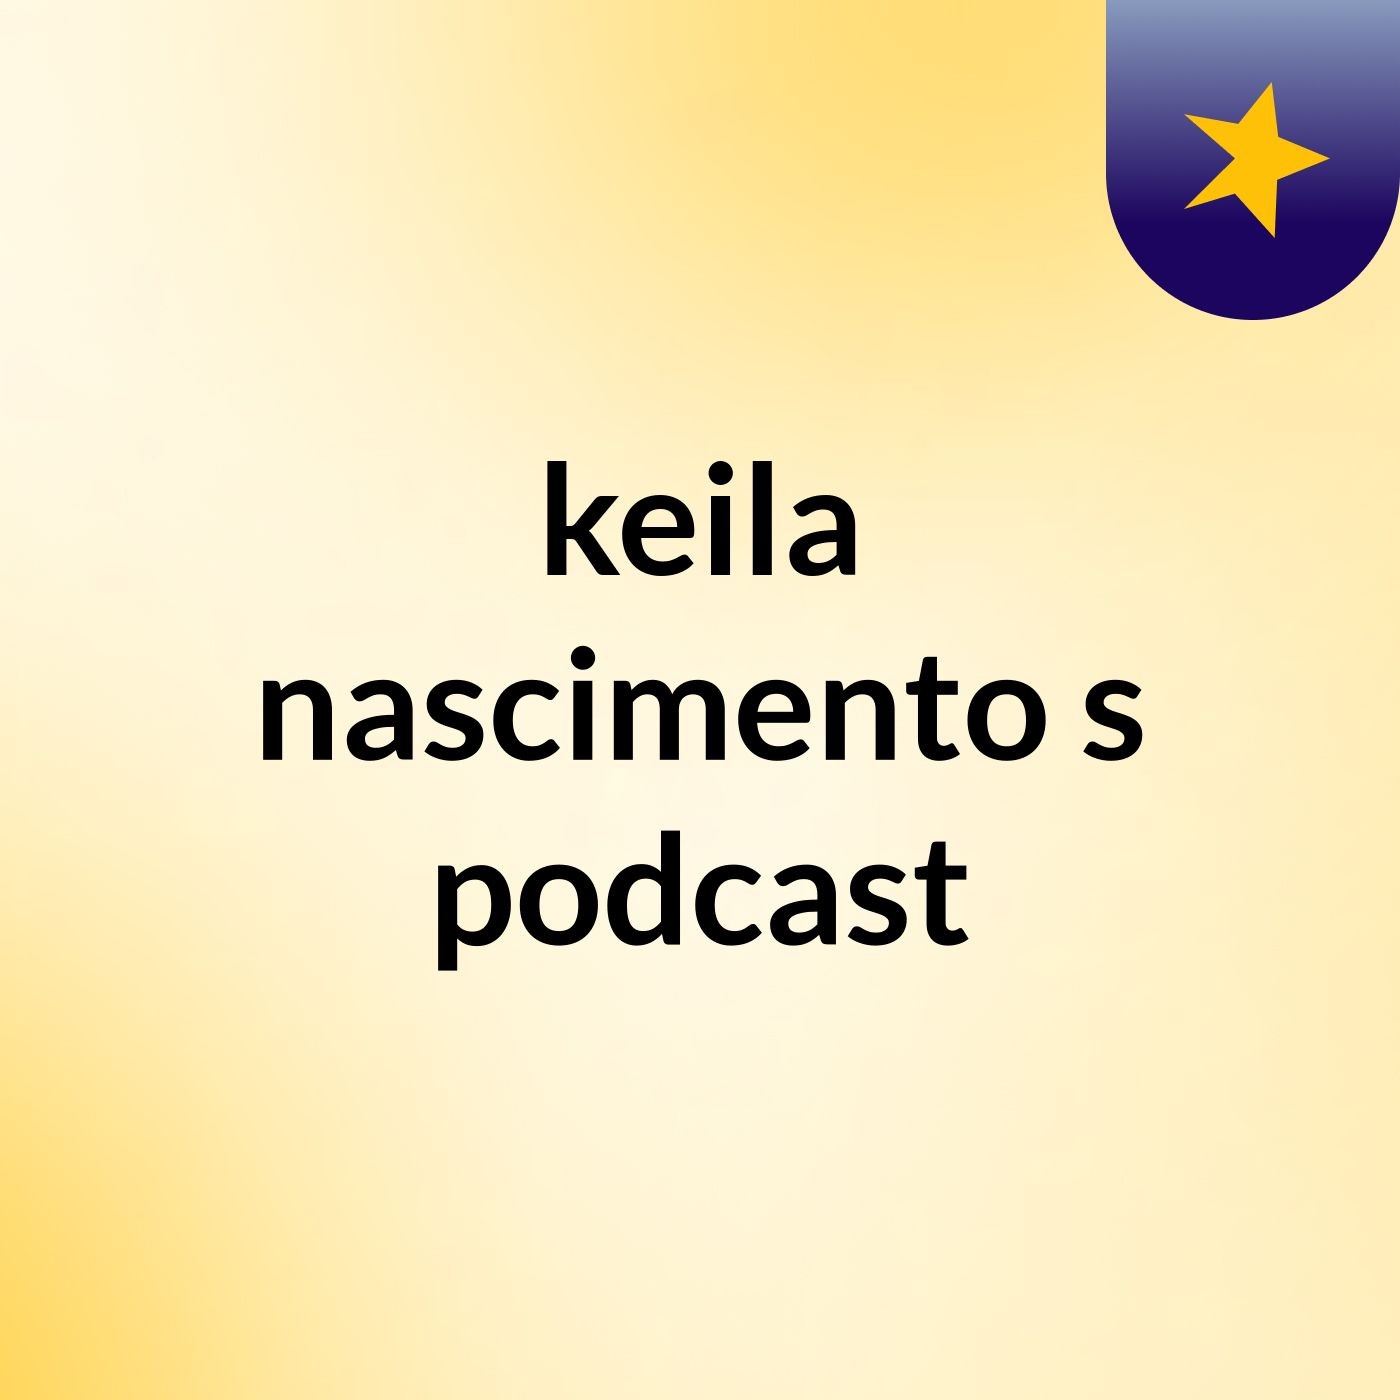 keila nascimento's podcast